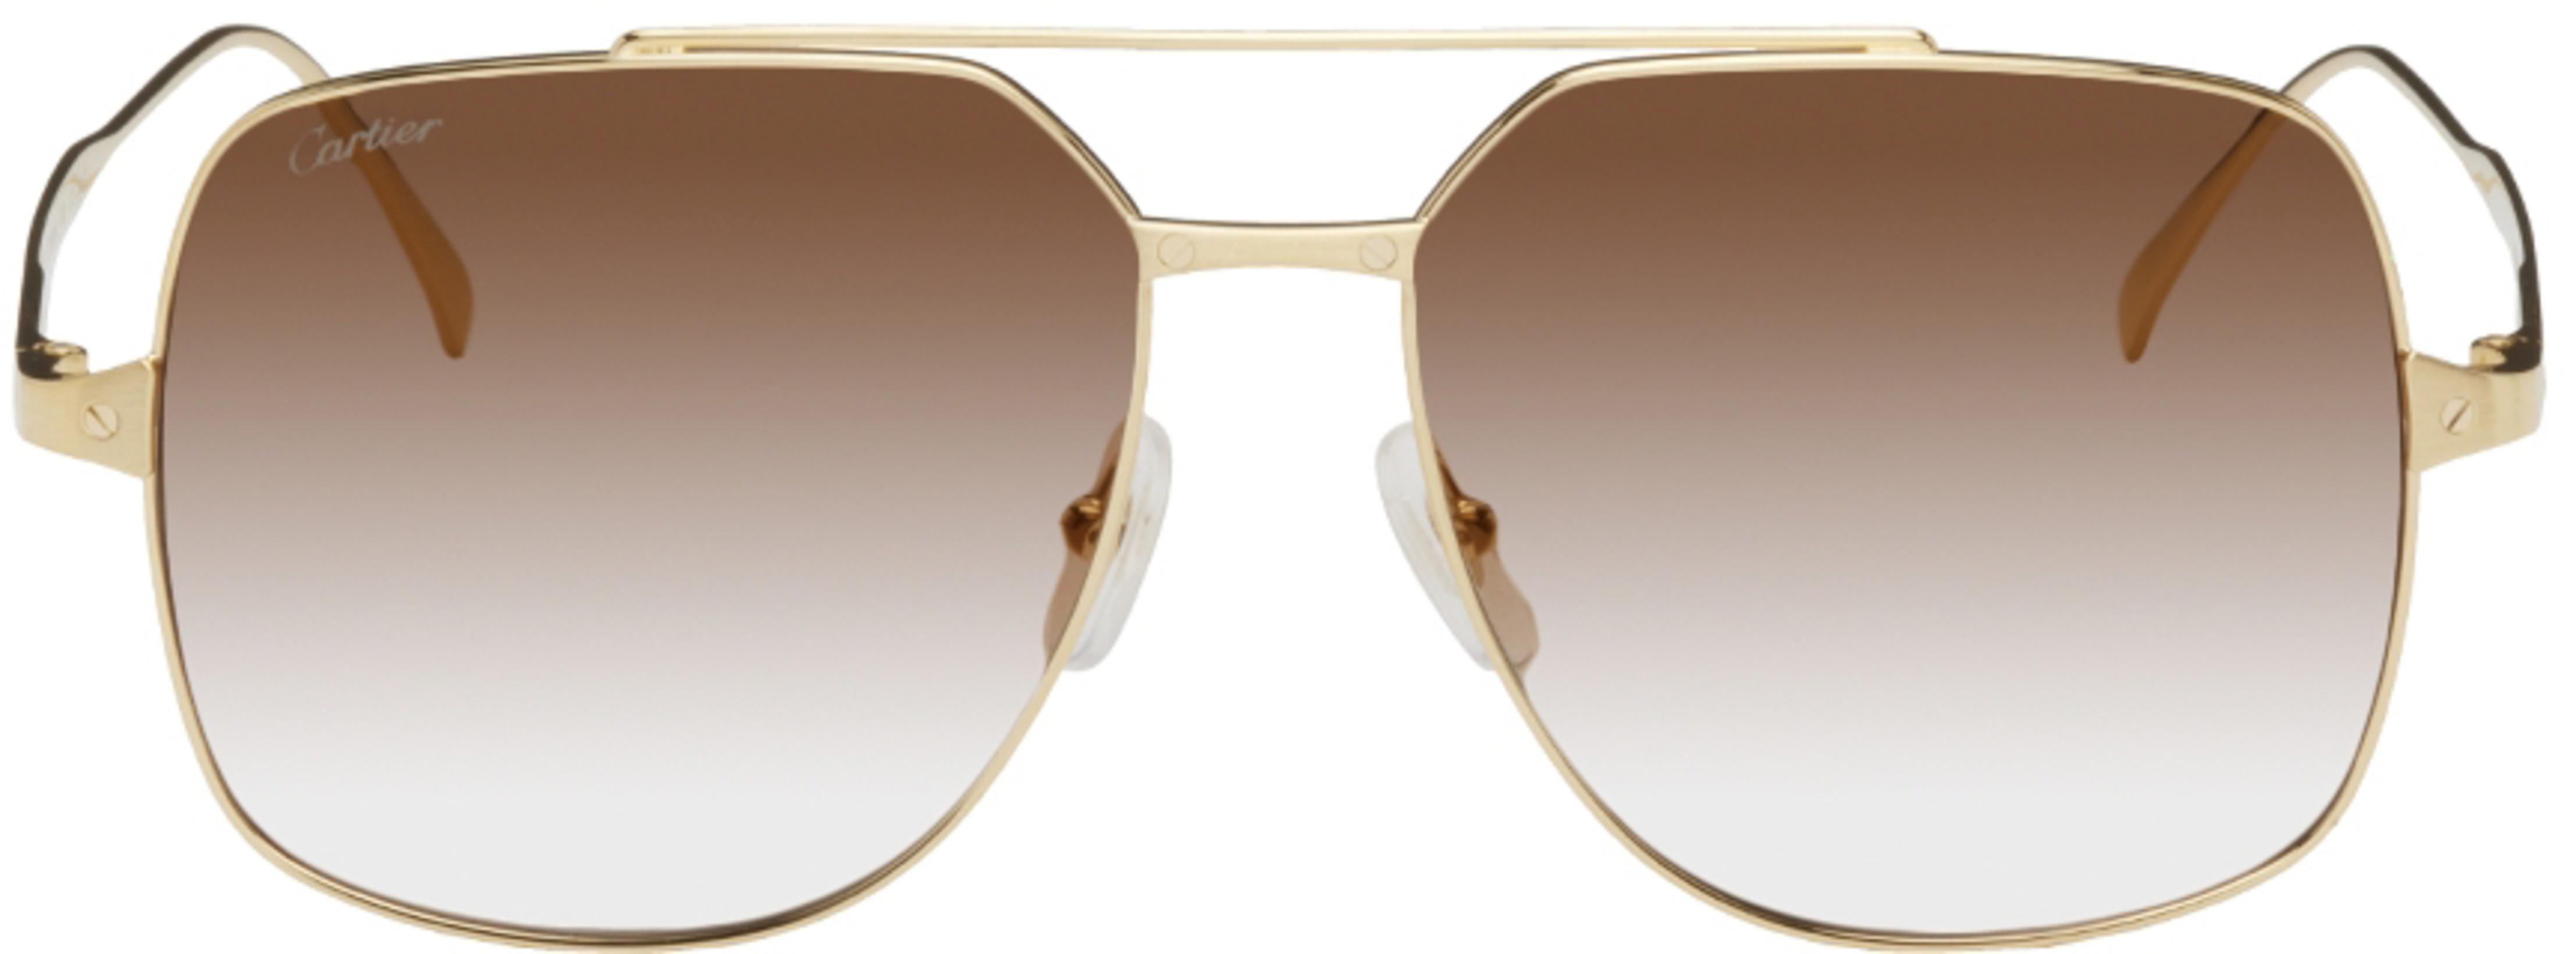 Gold Aviator Sunglasses by CARTIER